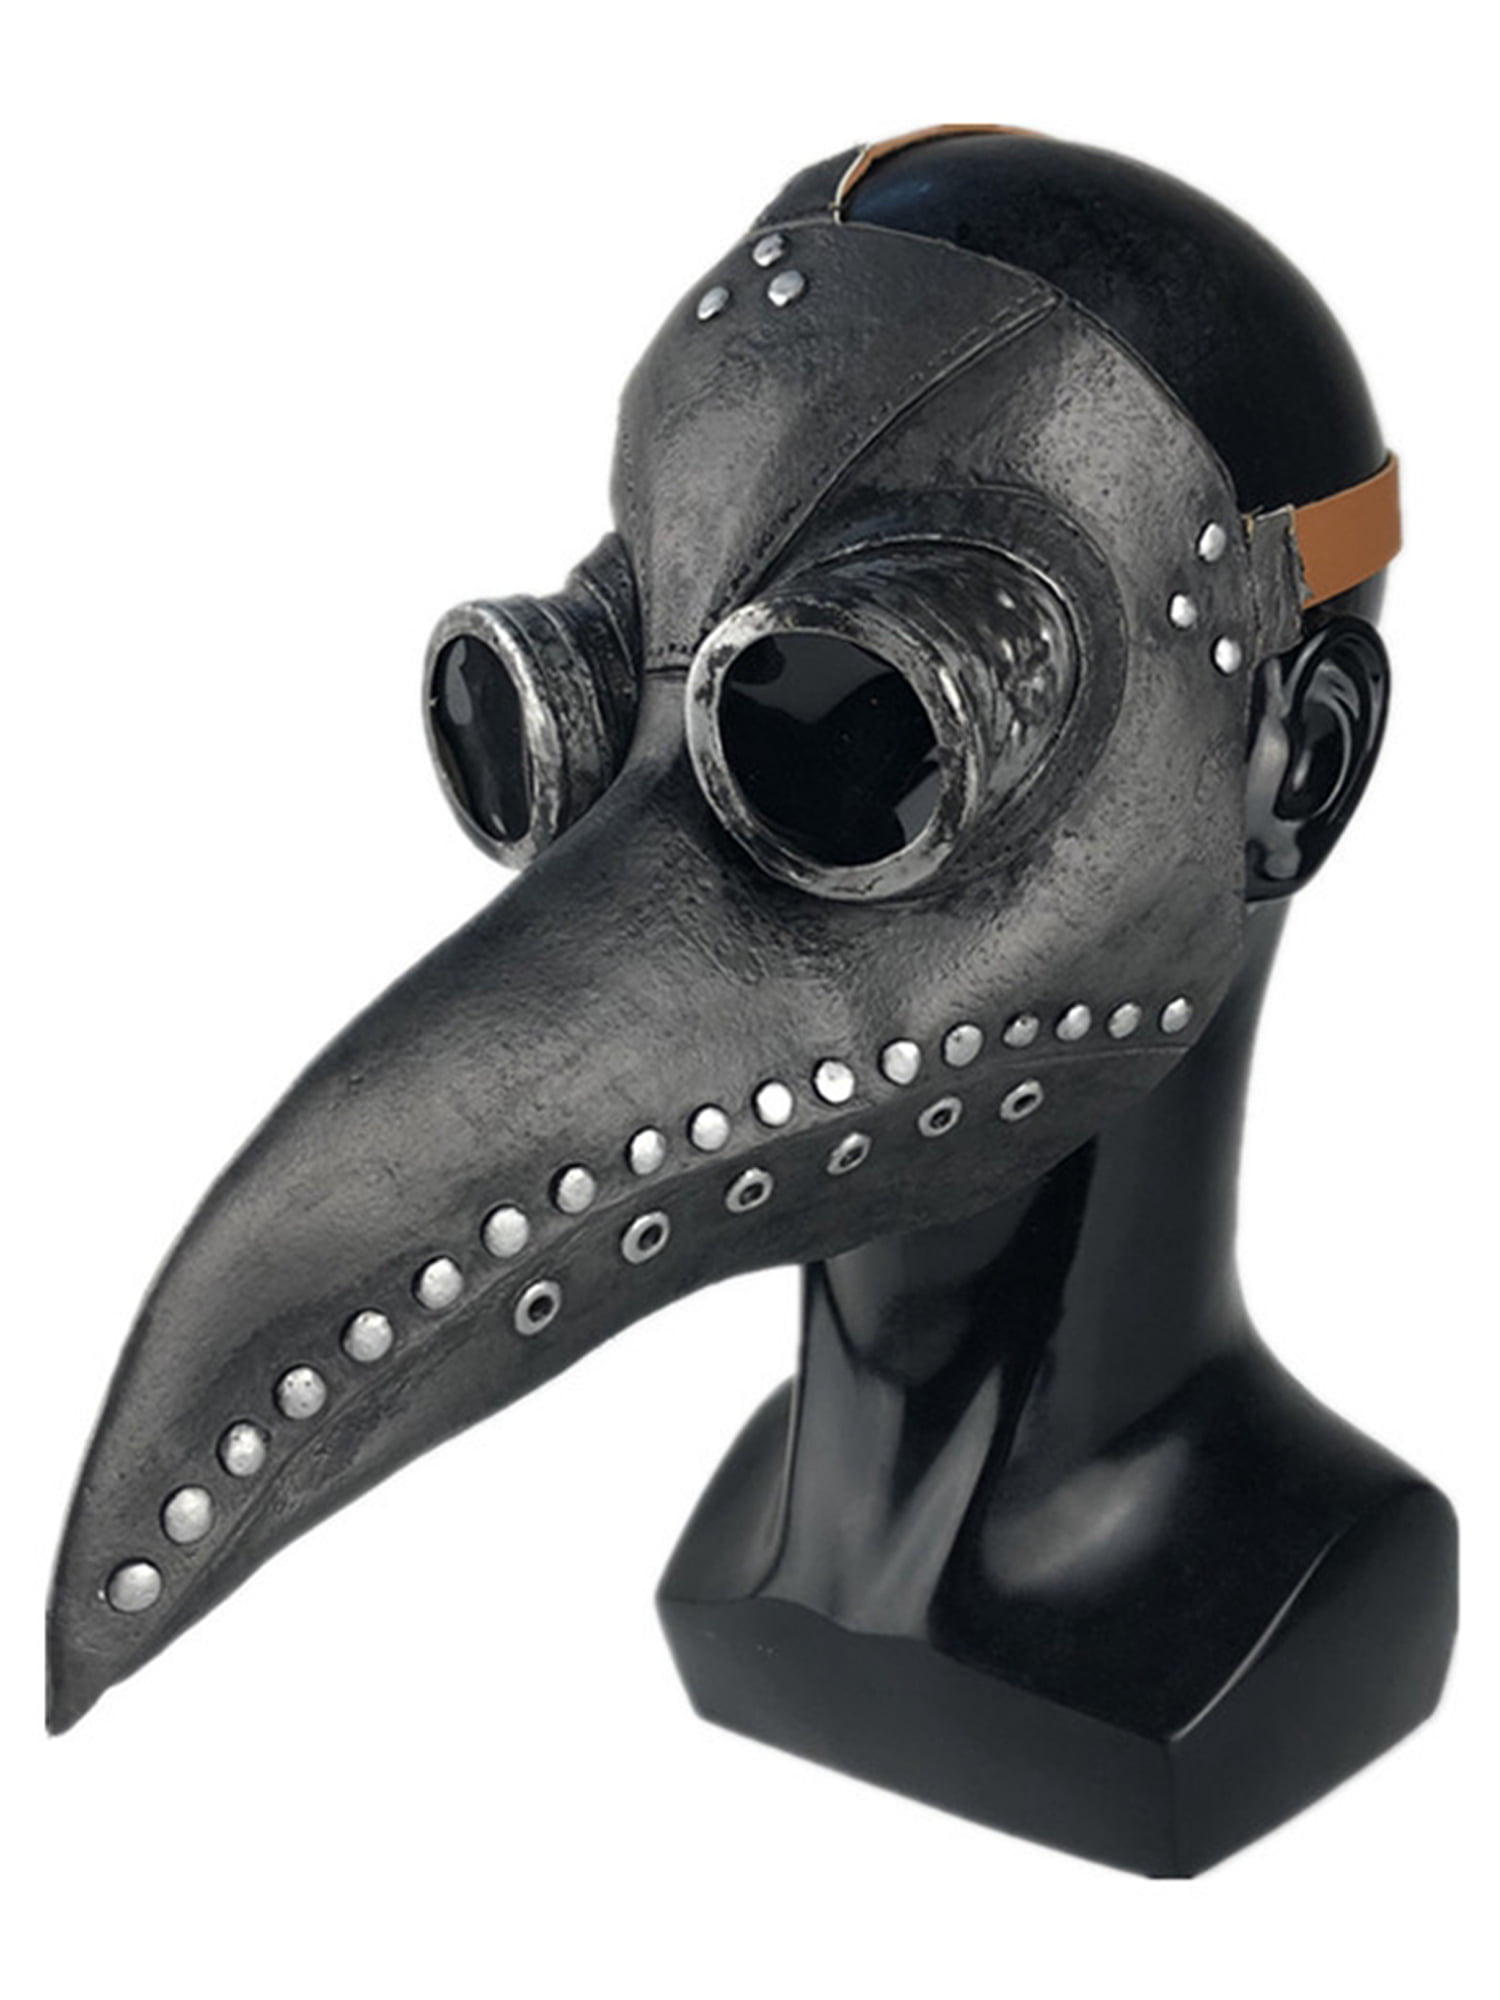 Halloween Props Beak Mask Medieval Punk Steam Bird mask Cosplay Halloween Costume Props